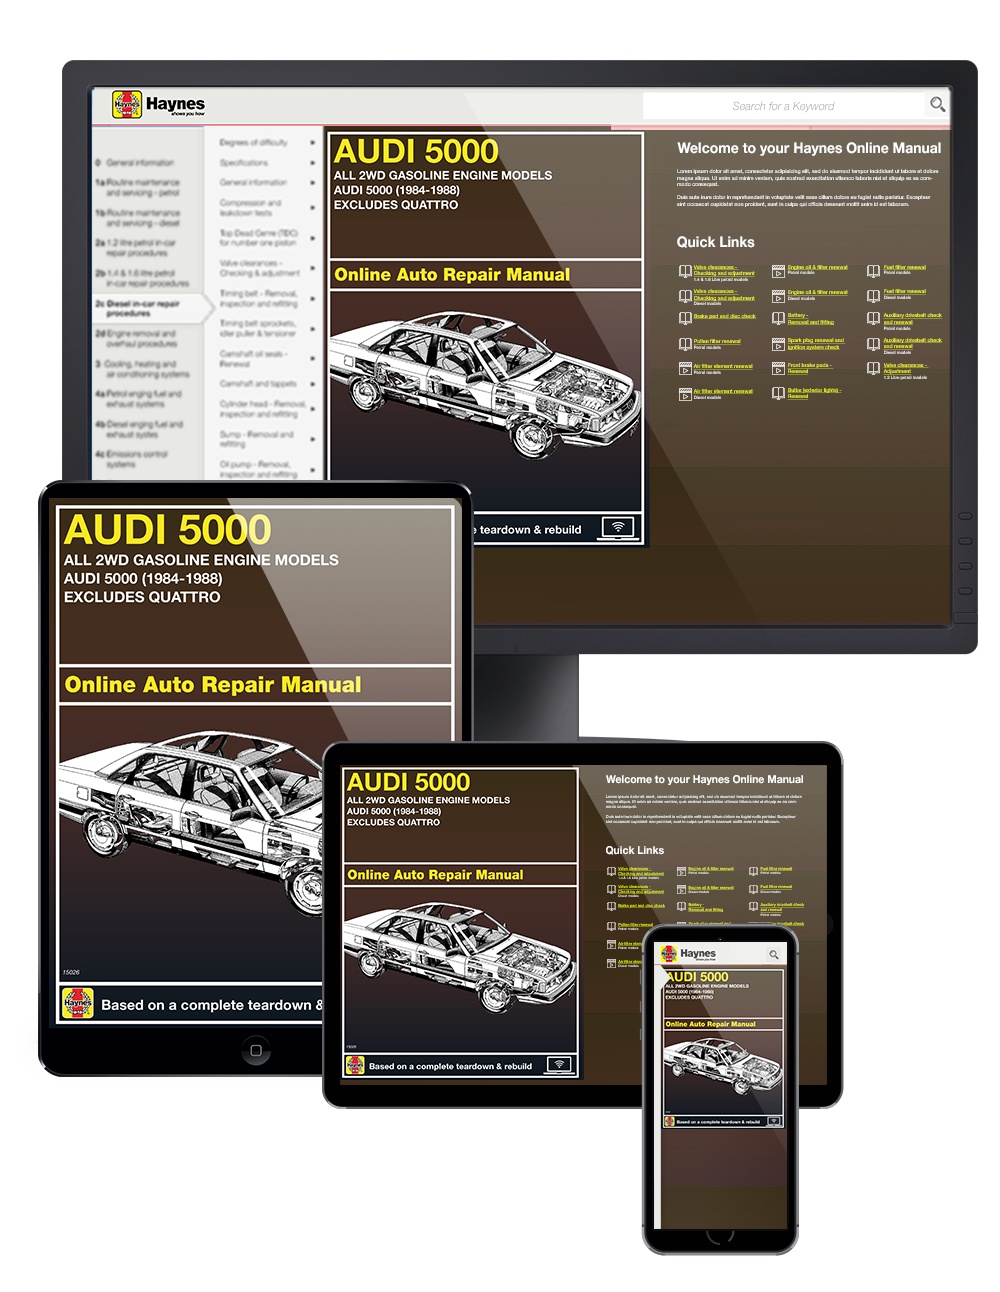 Audi A4 B5 Haynes Manual Download Free - newzine